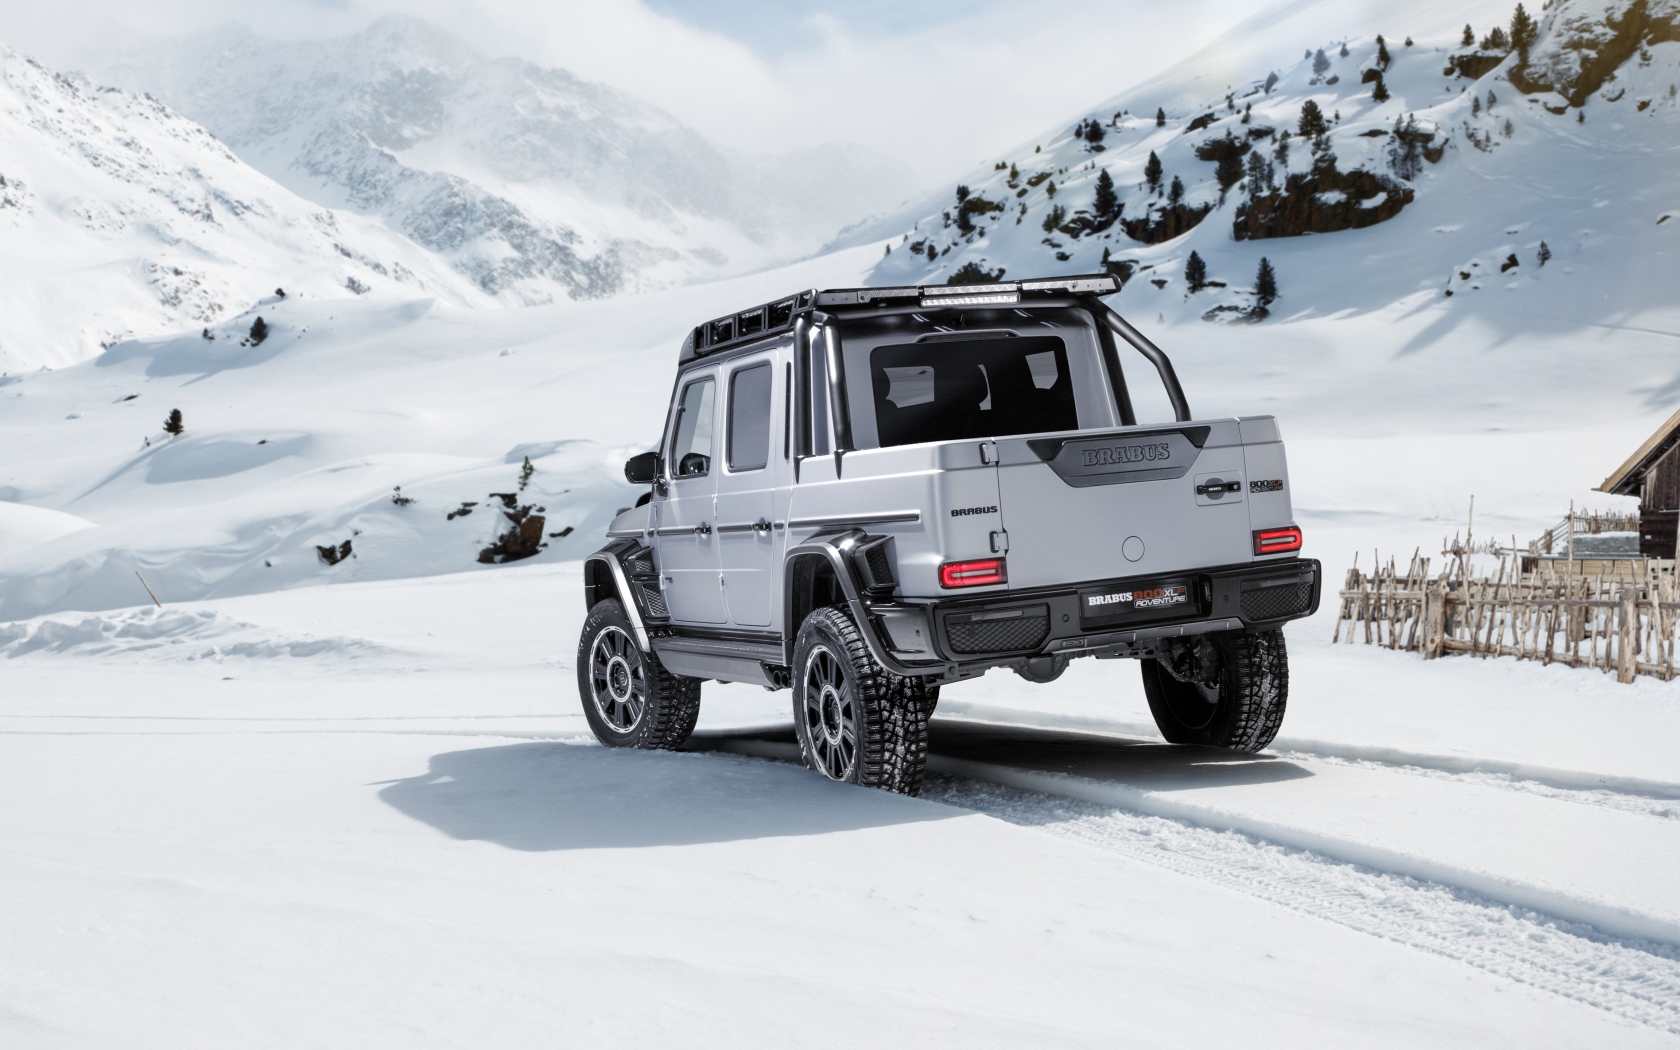 2020 Brabus 800 Adventure XLP in snowy mountains